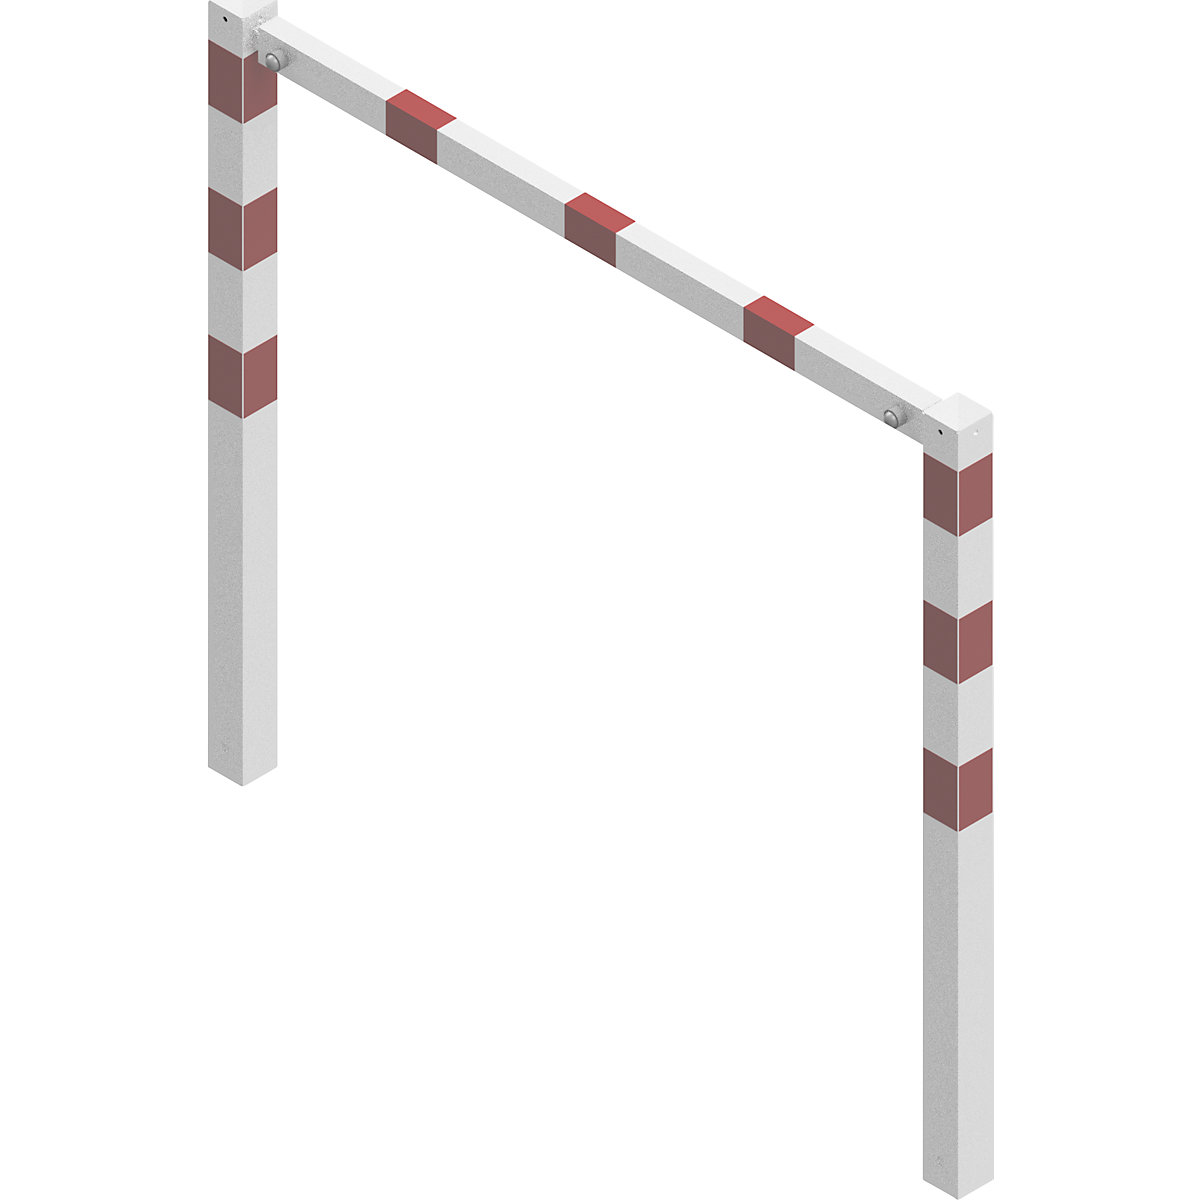 Access barrier, bolt-together